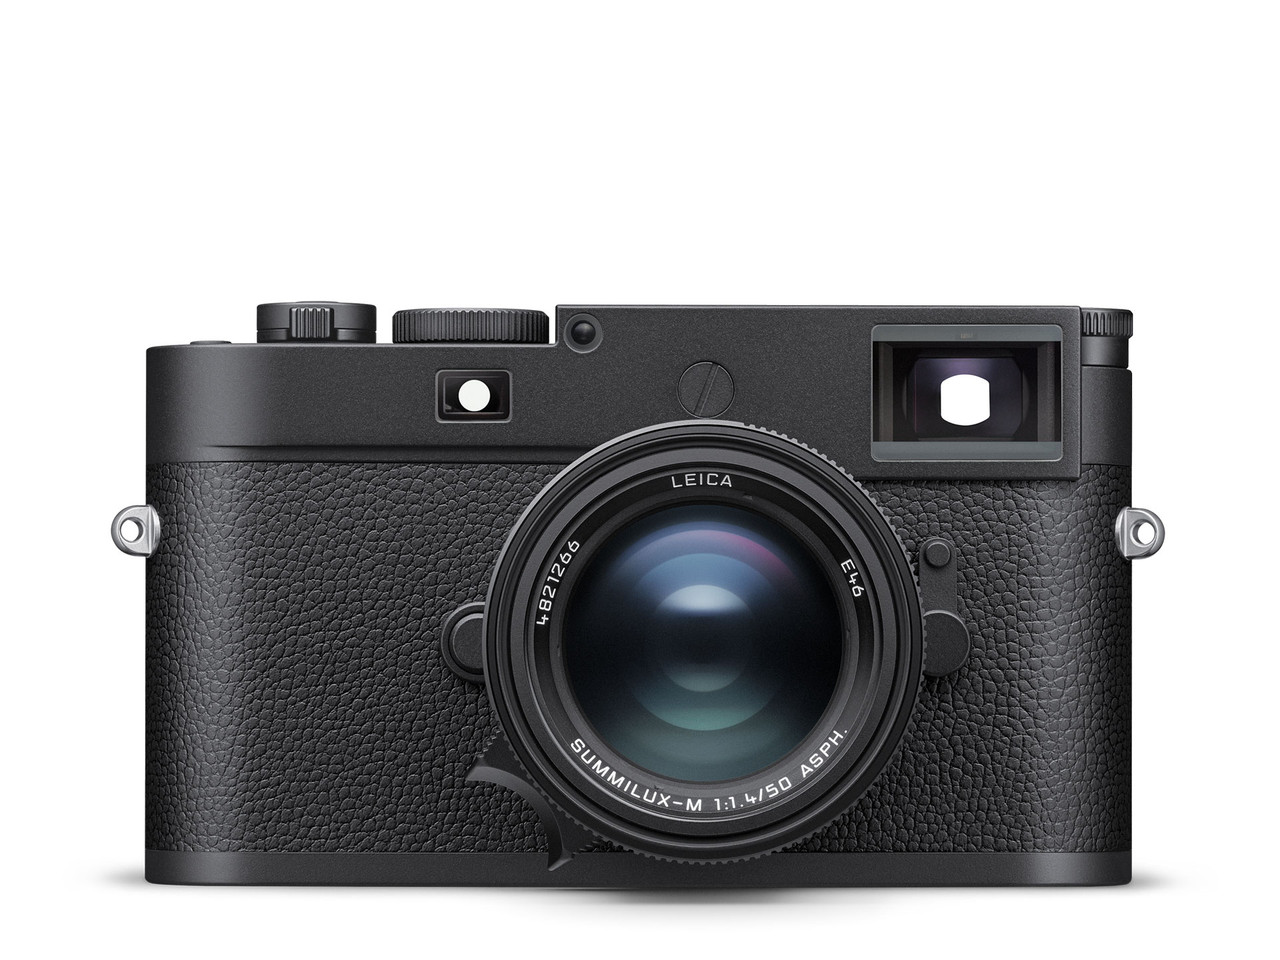  Leica Flash Case for D-Lux Flash, Black : Electronics